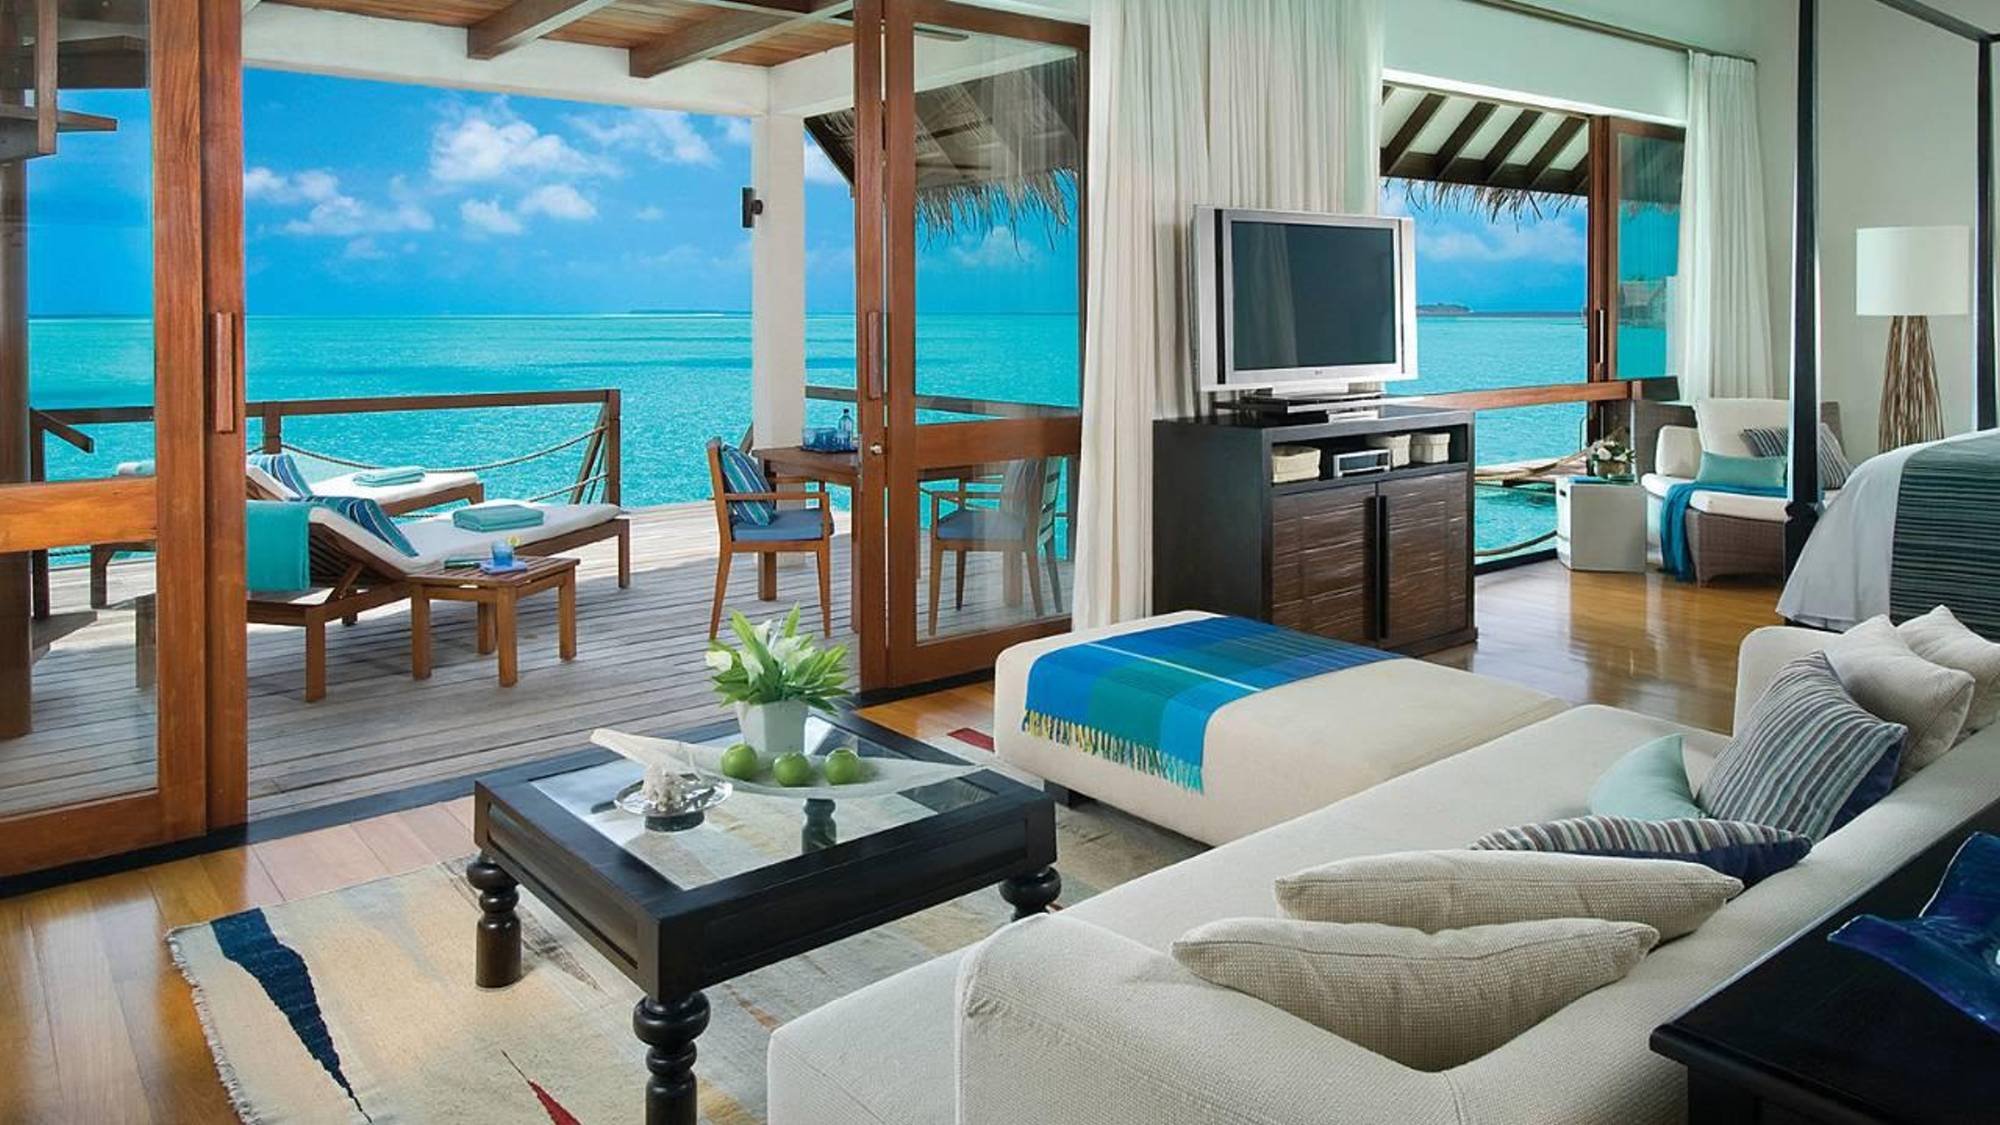 Отдых с видом на море. Four Seasons Maldives Landaa Giraavaru. Бора Бора four Seasons. Вилла с видом на океан. Гостиница на берегу моря.